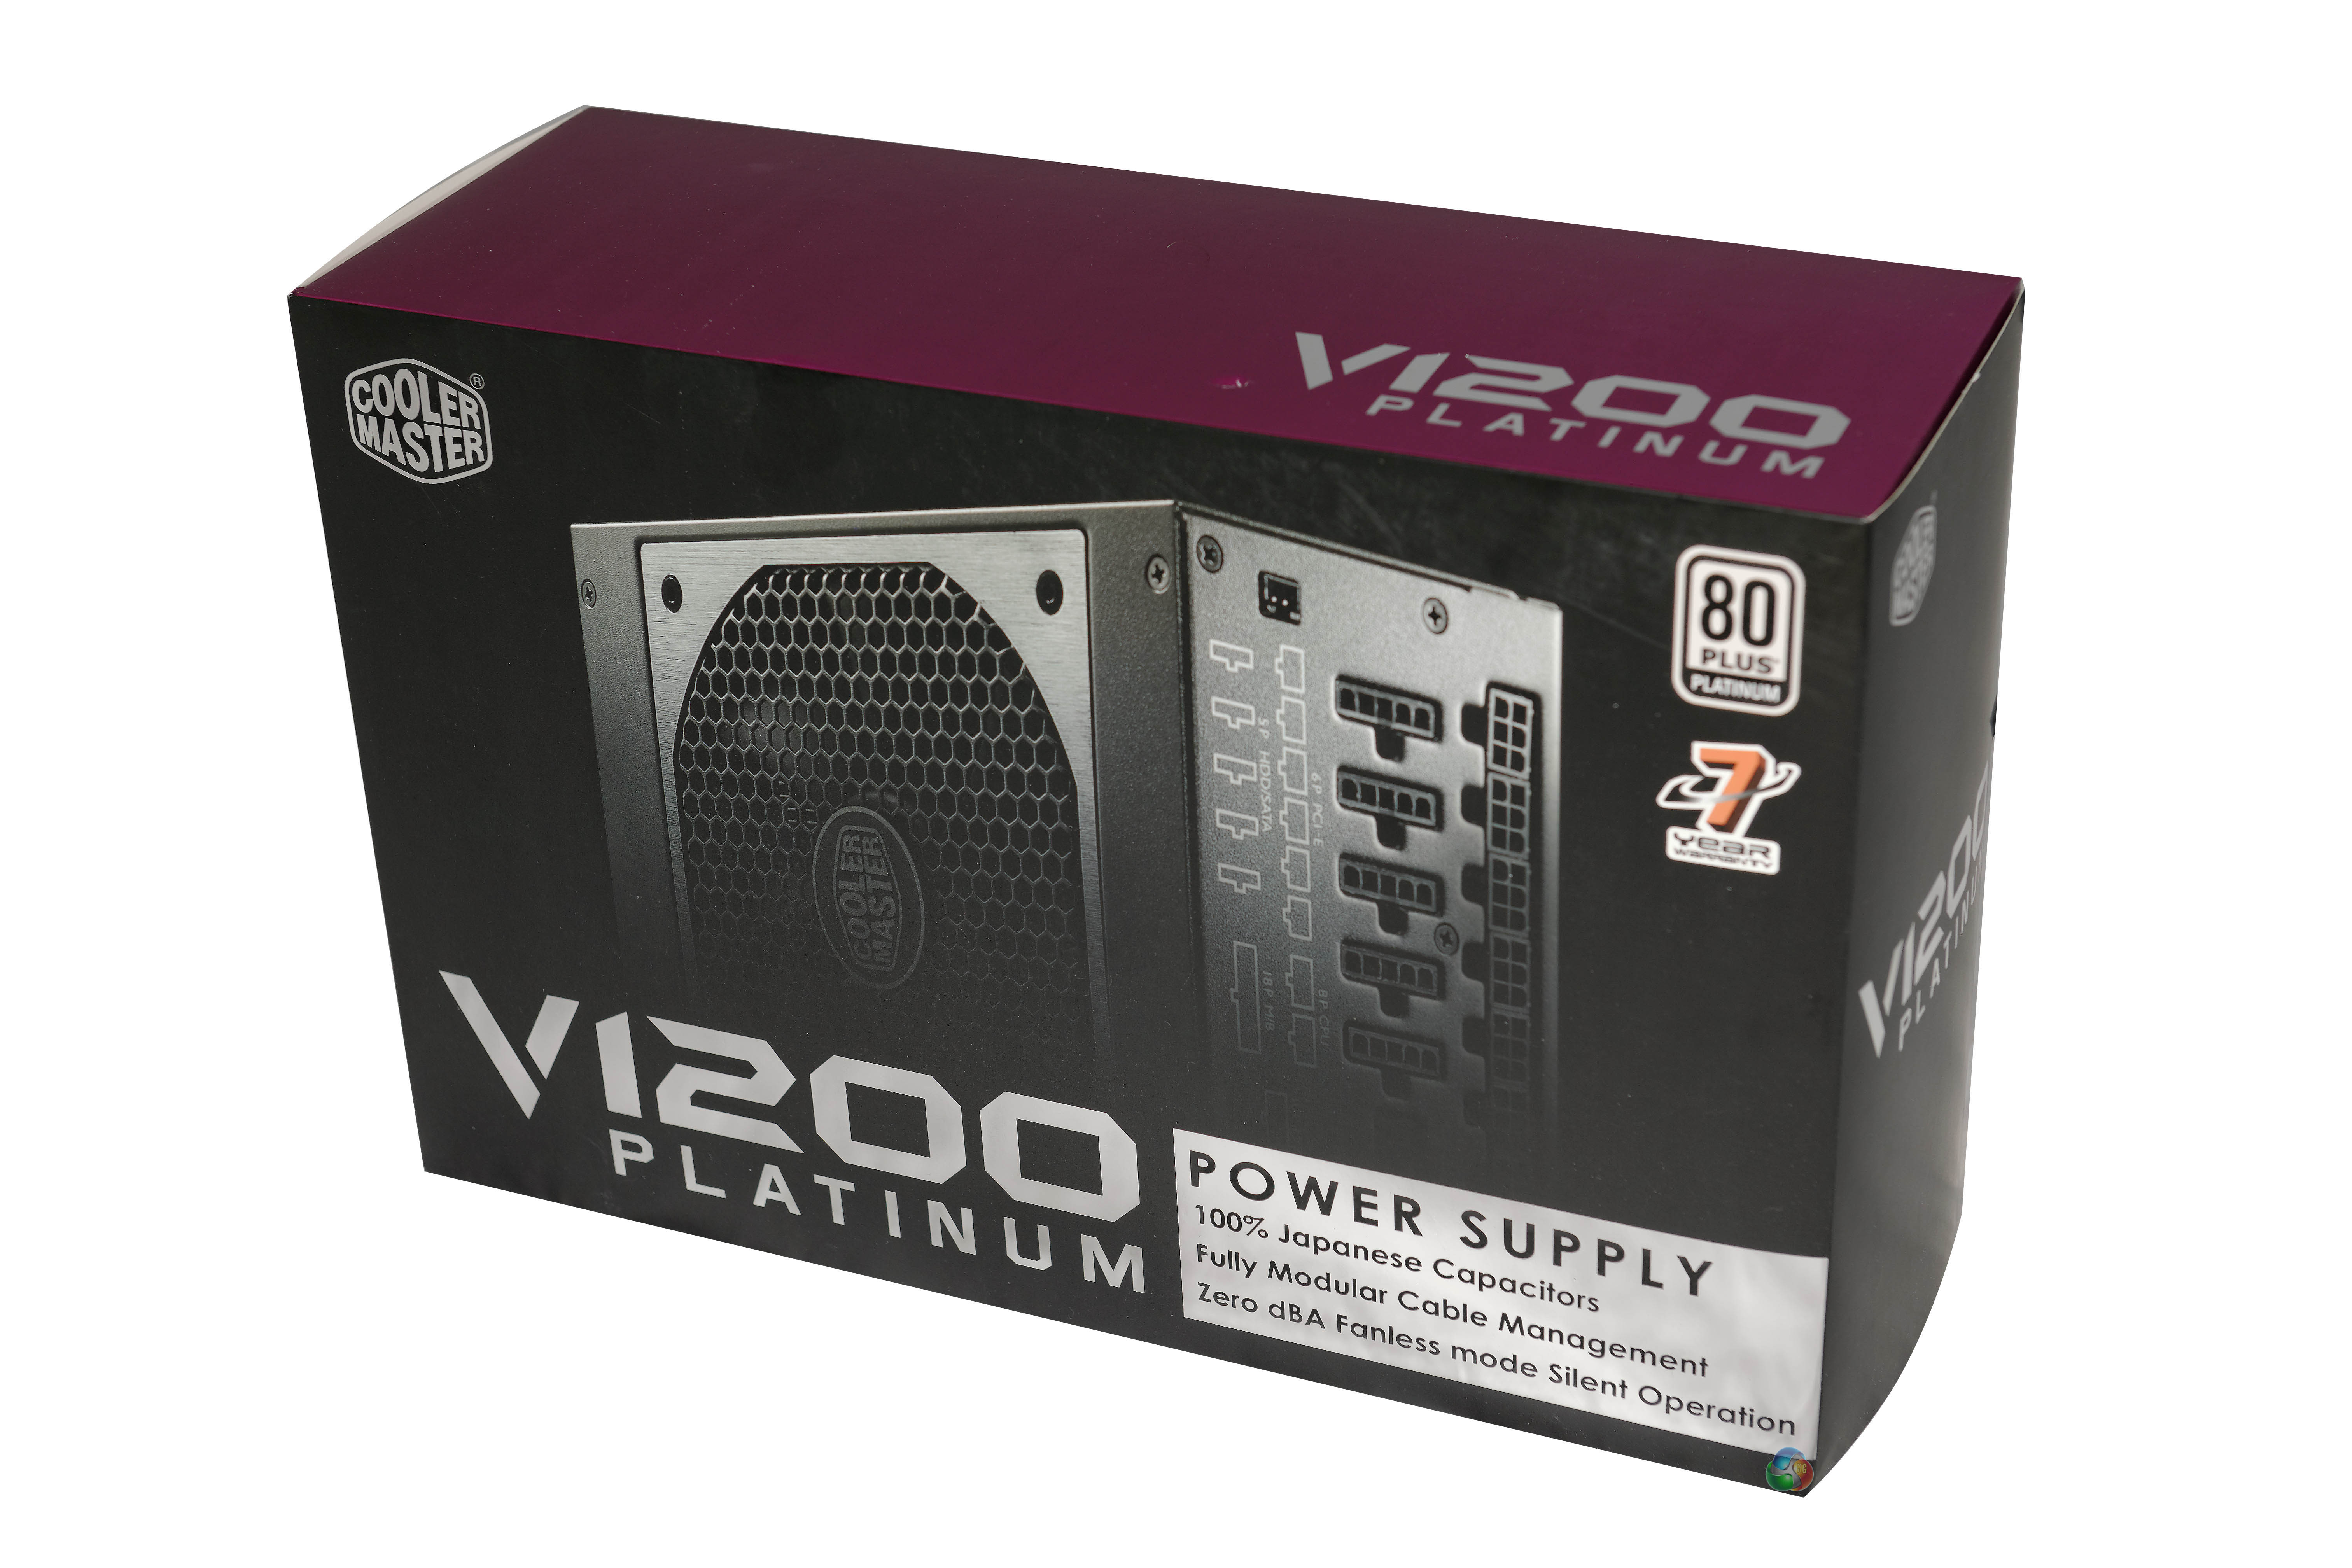 Cooler Master V1200 Platinum Power Supply Review | KitGuru